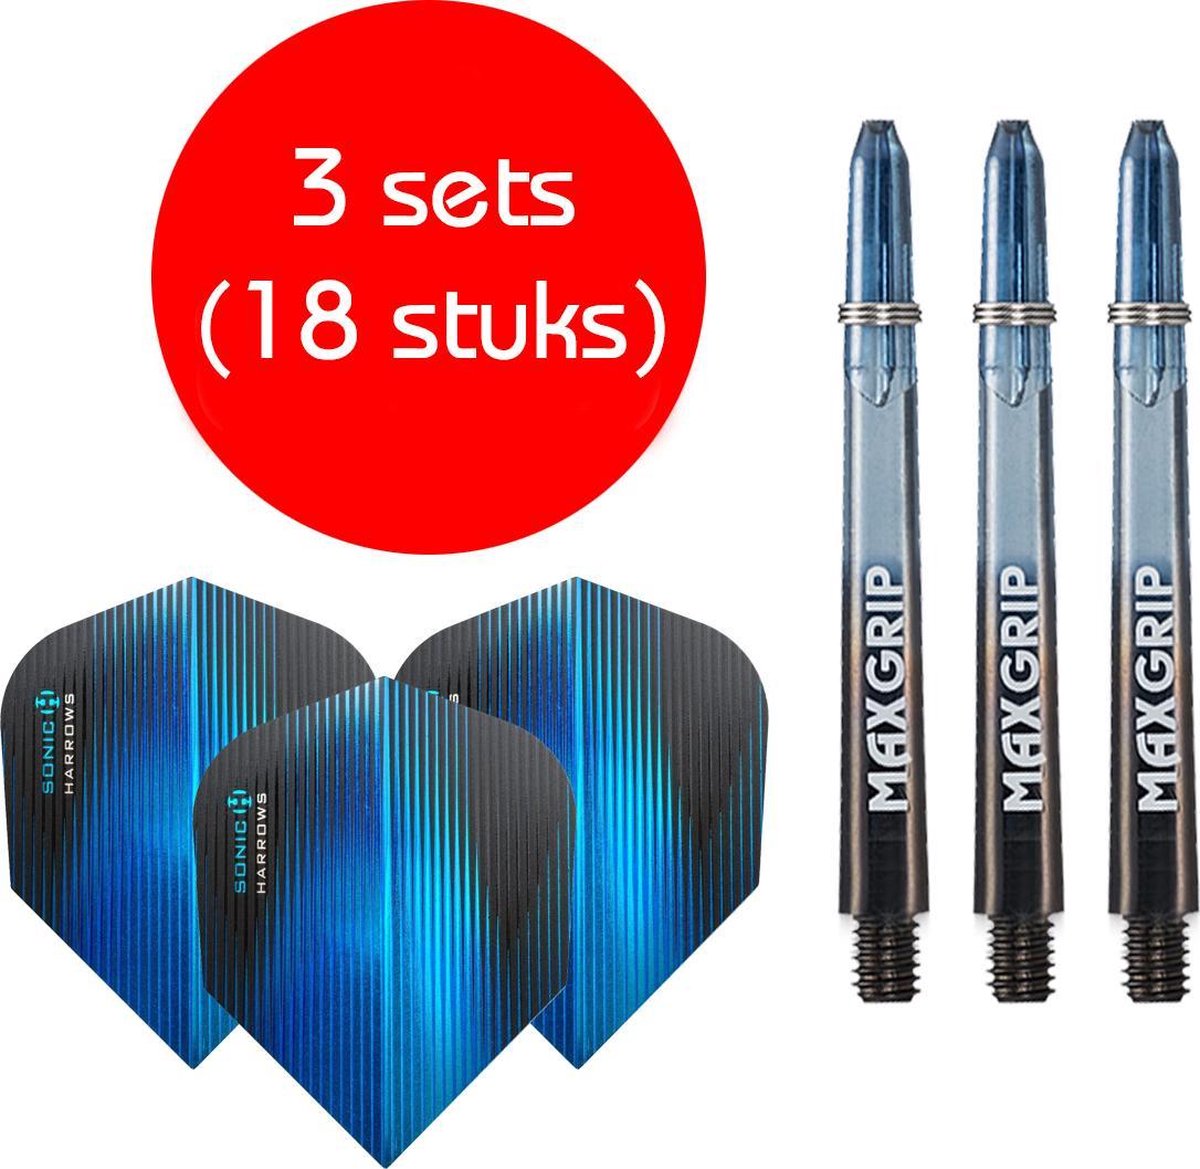 Darts Set - Maxgrip - 3 sets - darts shafts - zwart-blauw - medium - en 3 sets - Sonic blauw - darts flights